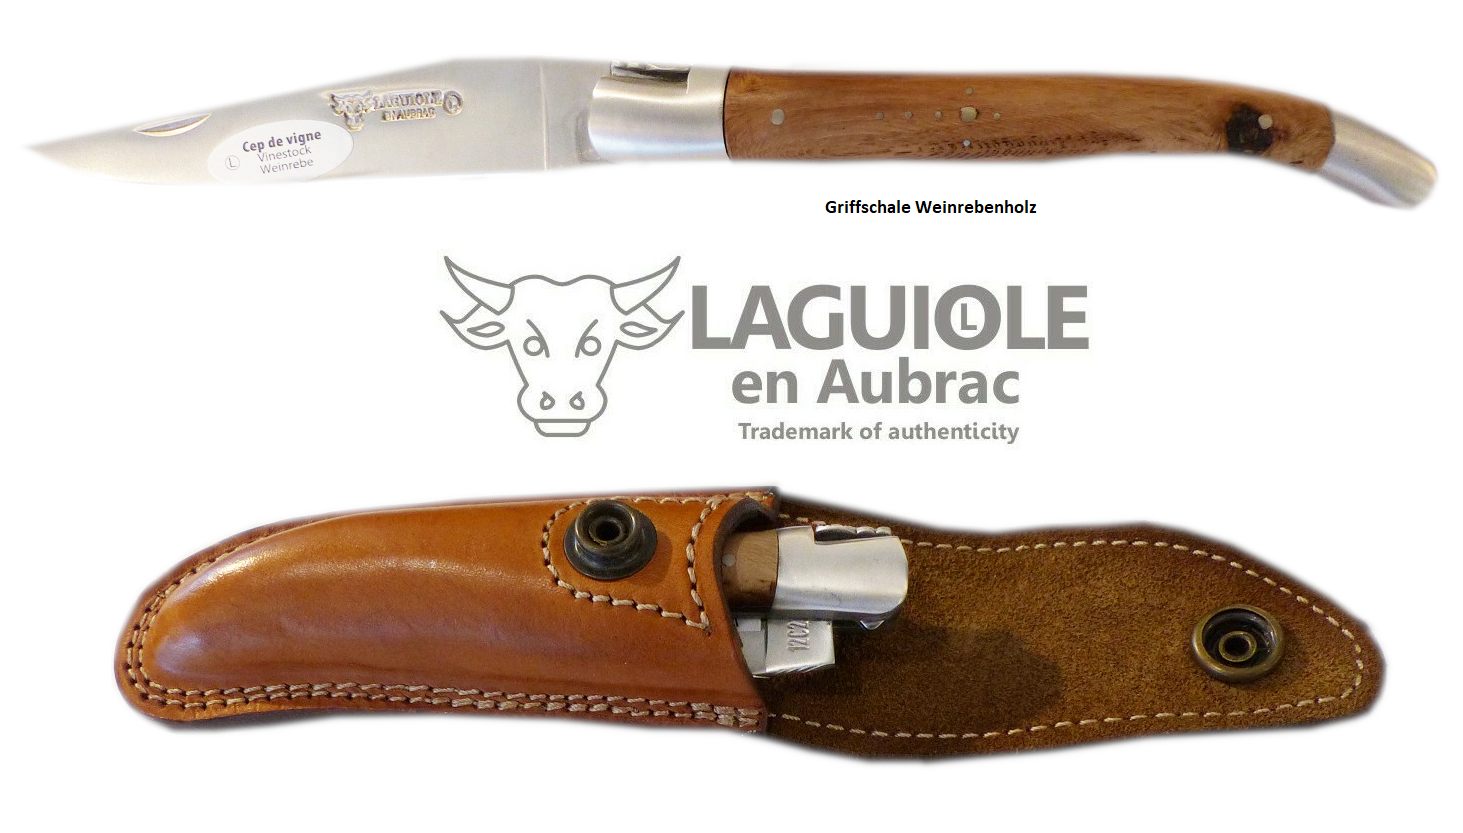 LAGUIOLE en Aubrac Original Taschenmesser Griffschalen aus Werinrebenholz 